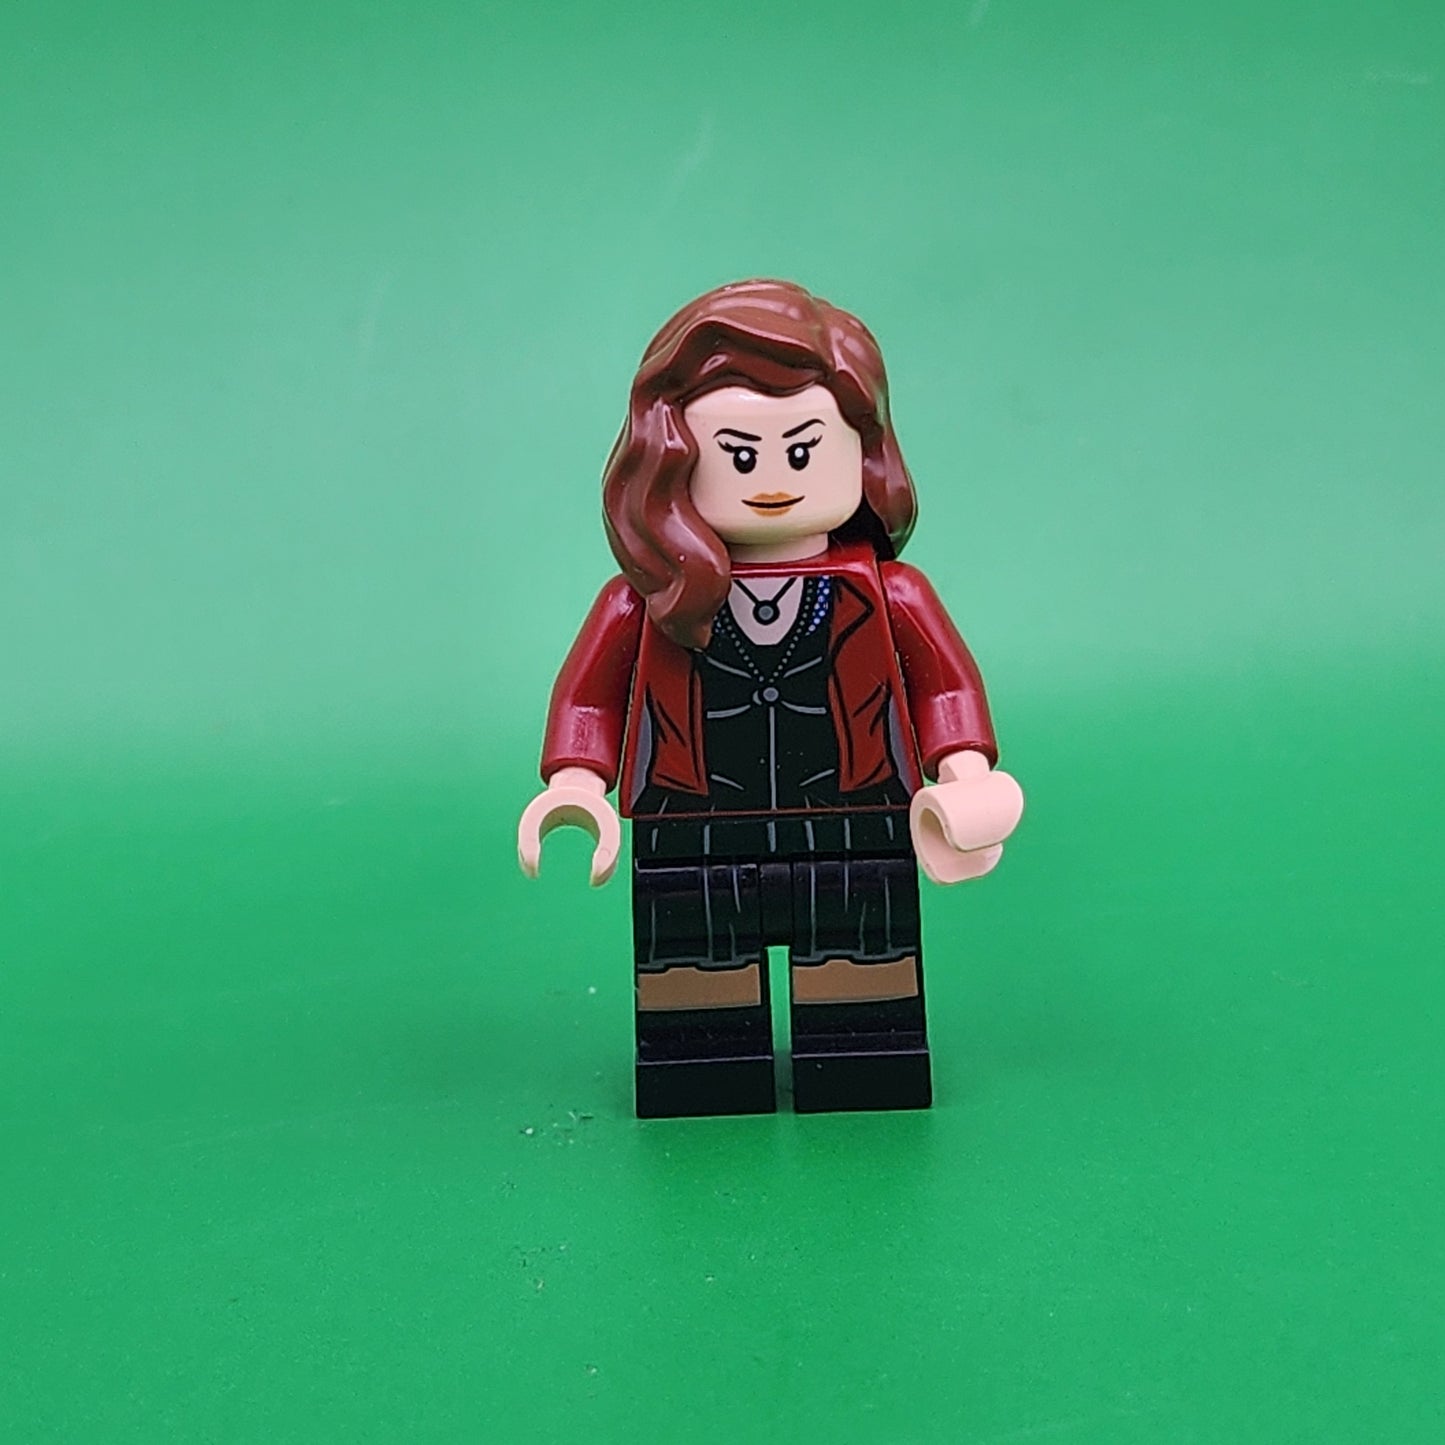 Lego The Scarlet Witch (Wanda Maximoff) Minifigure sh174 Avengers Age of Ultron